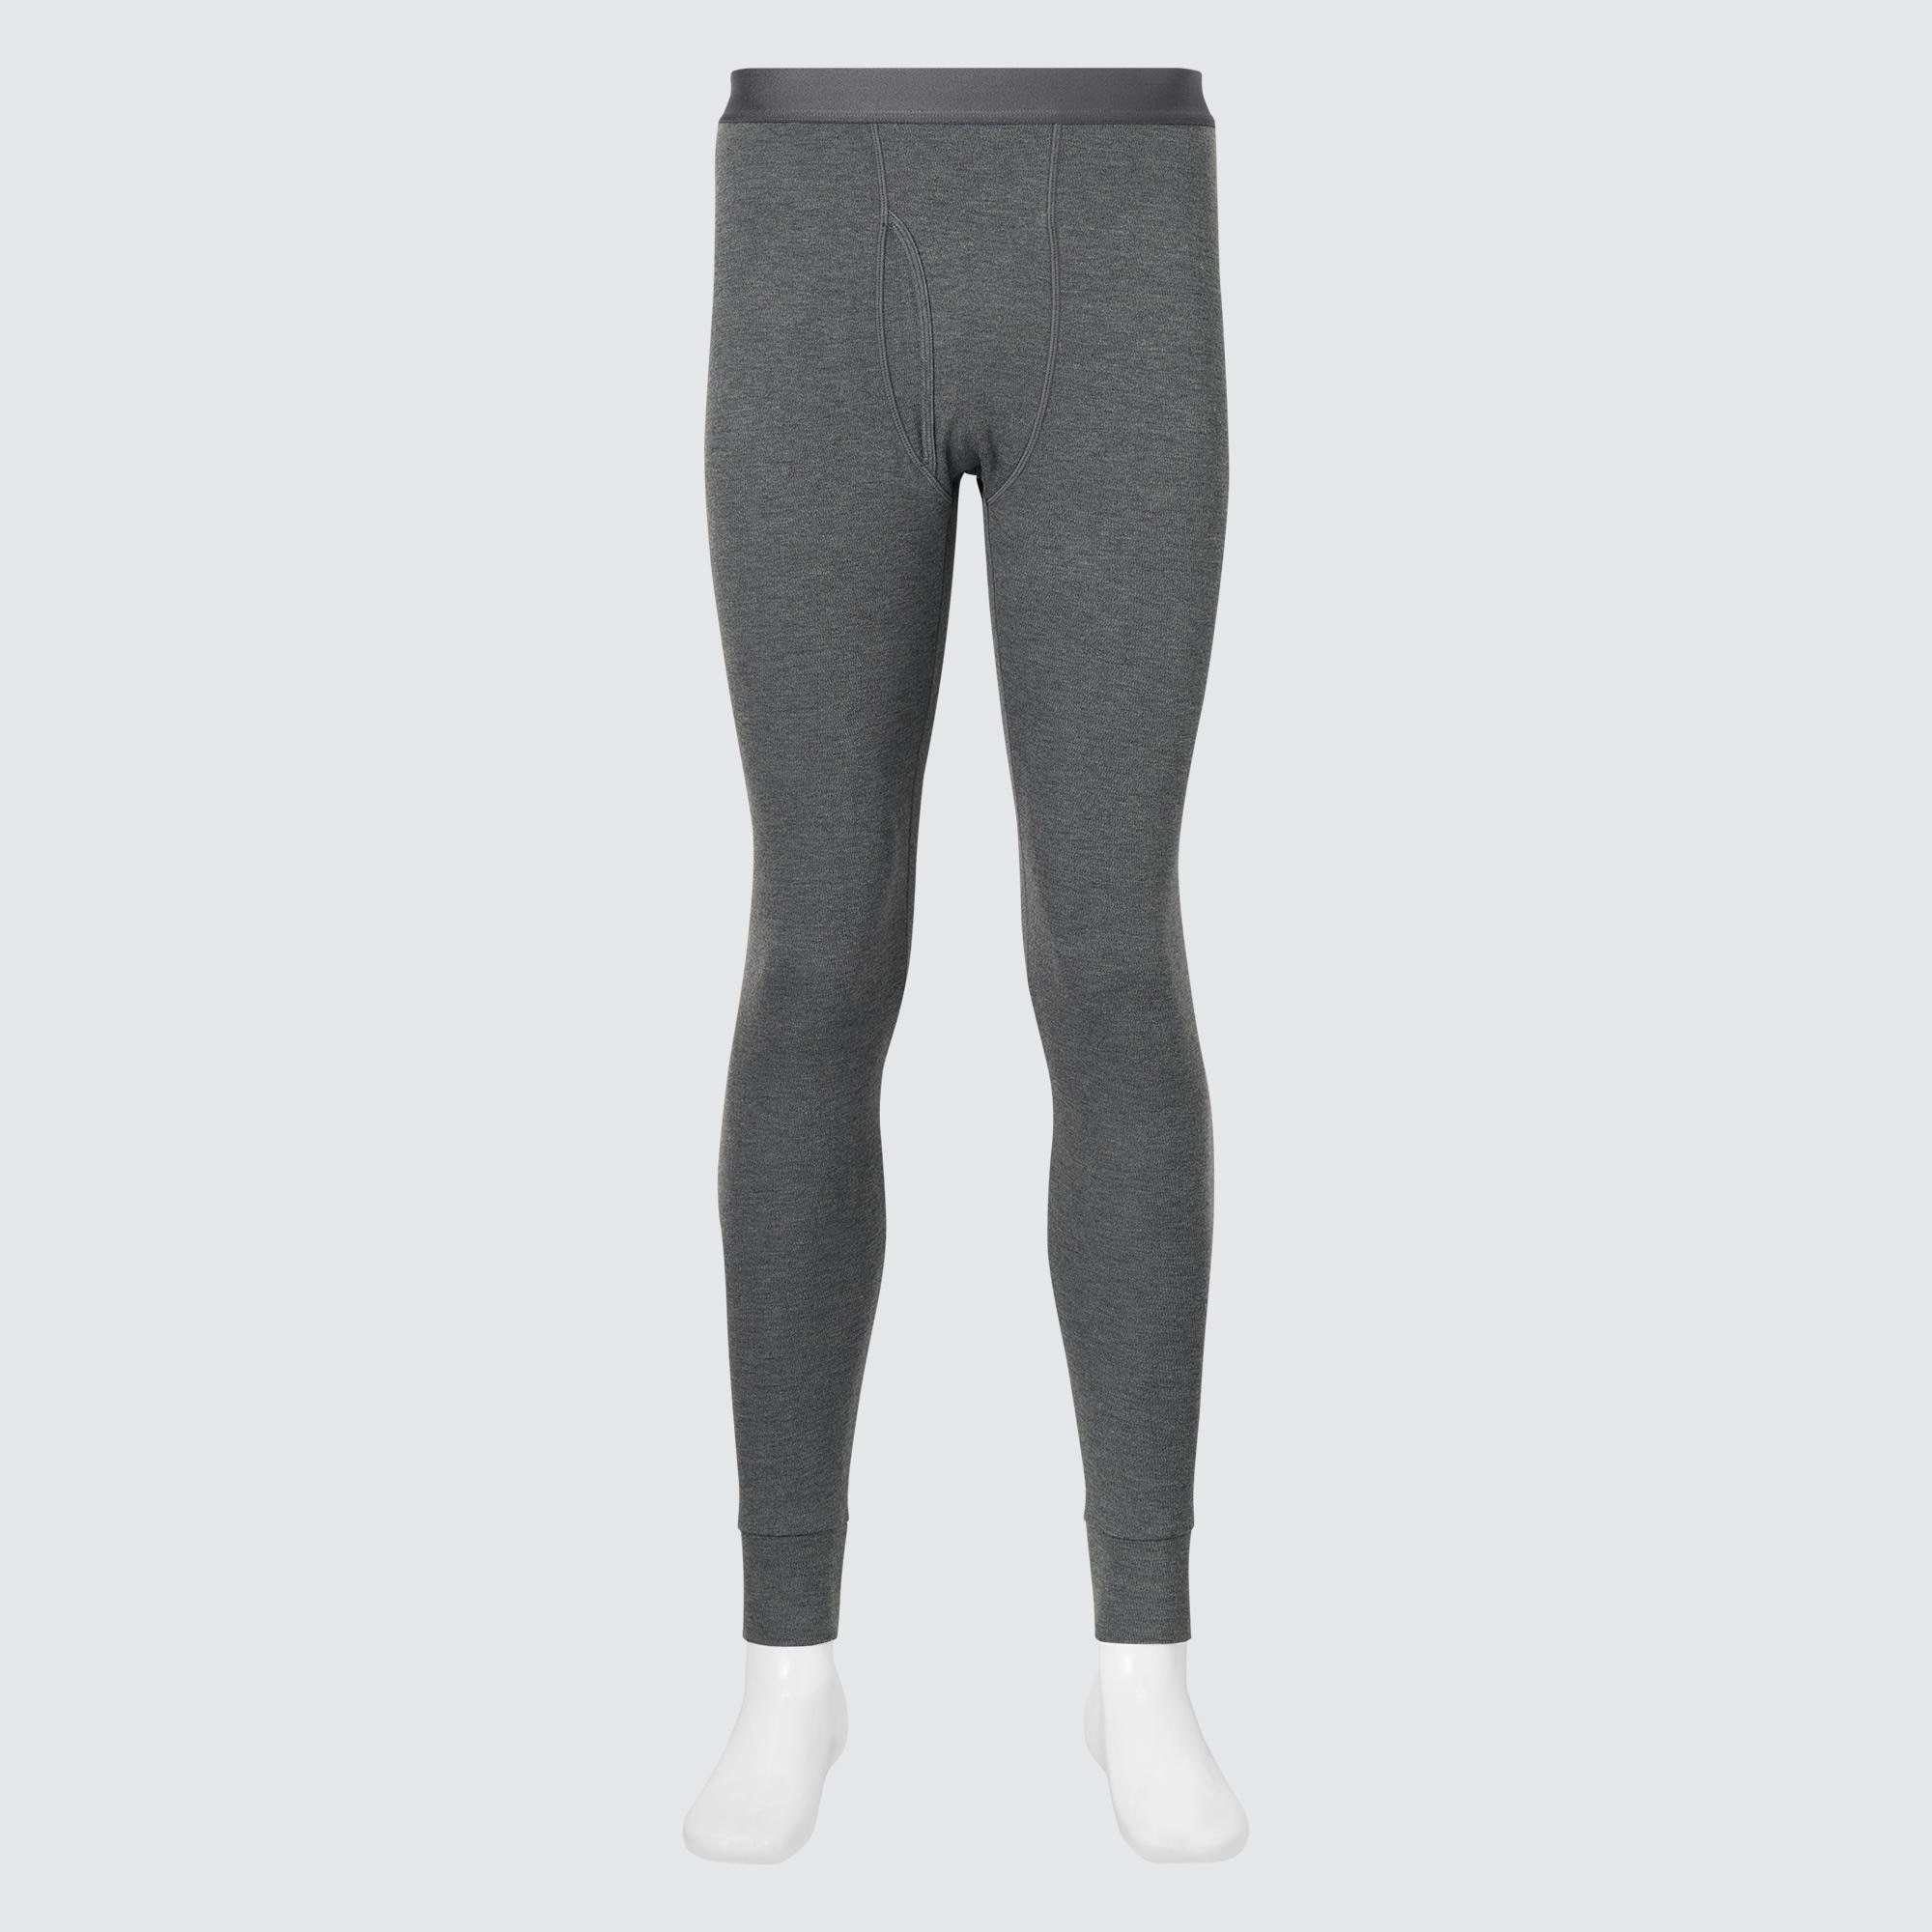 Inc Postage Uniqlo Extra Warm Heattech Leggings (Dark Grey), Women's  Fashion, Bottoms, Jeans & Leggings on Carousell